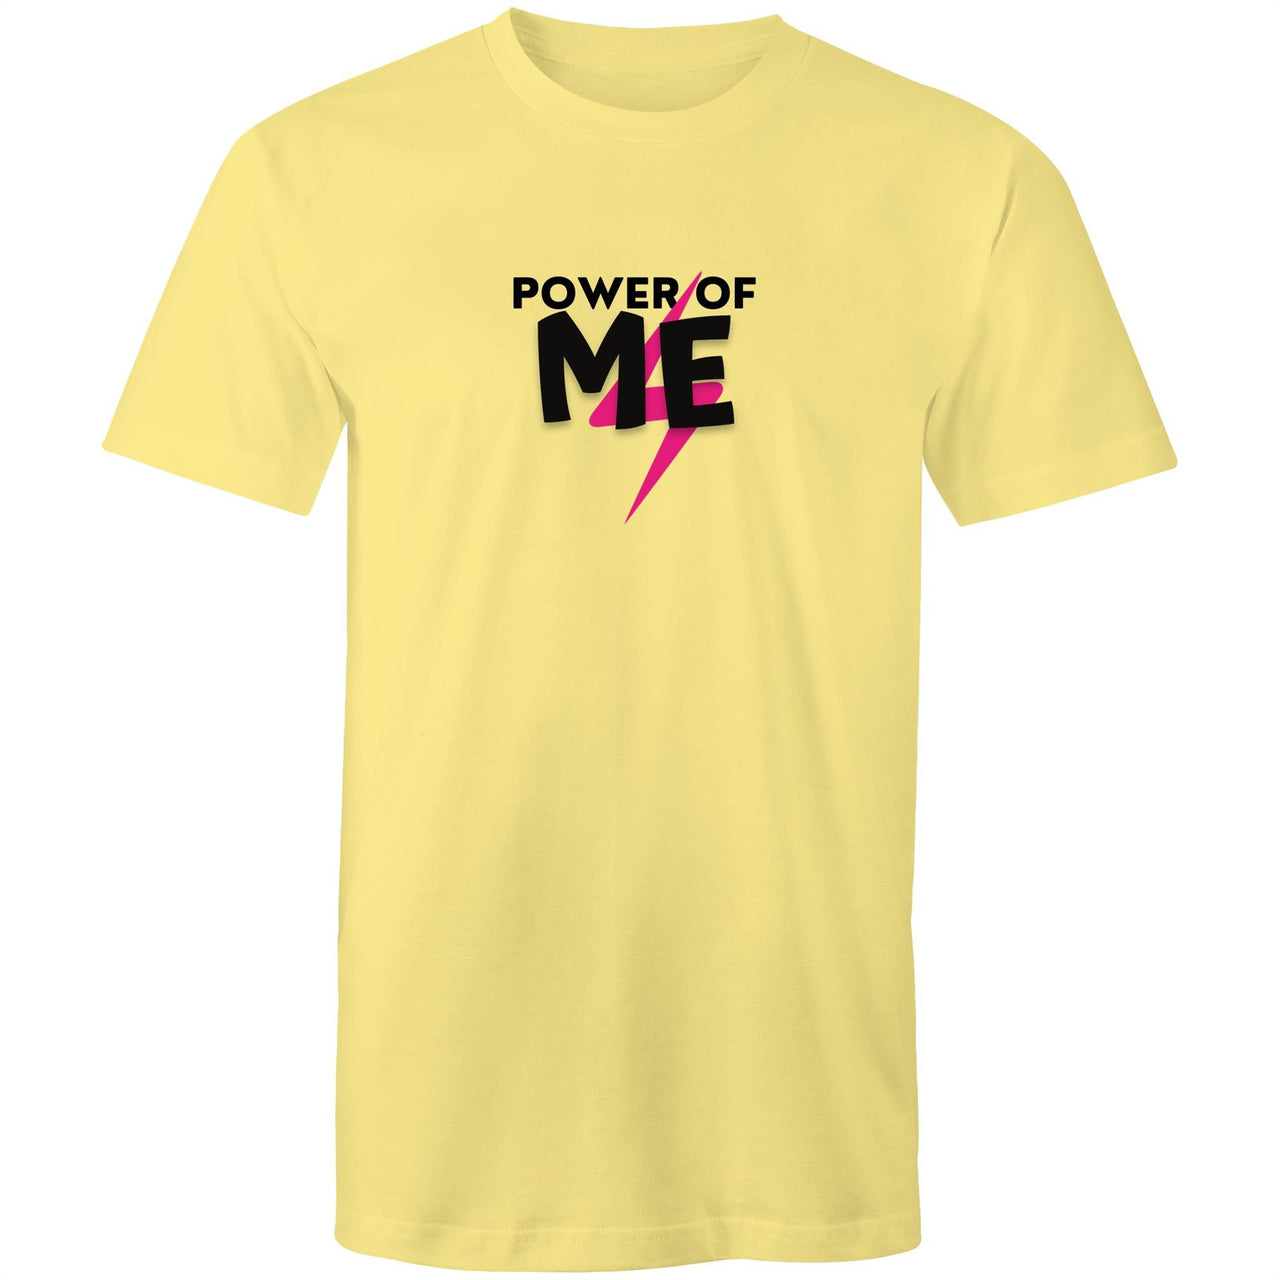 CBF Power of Me Crew T-Shirt yellow by CBF Clothing